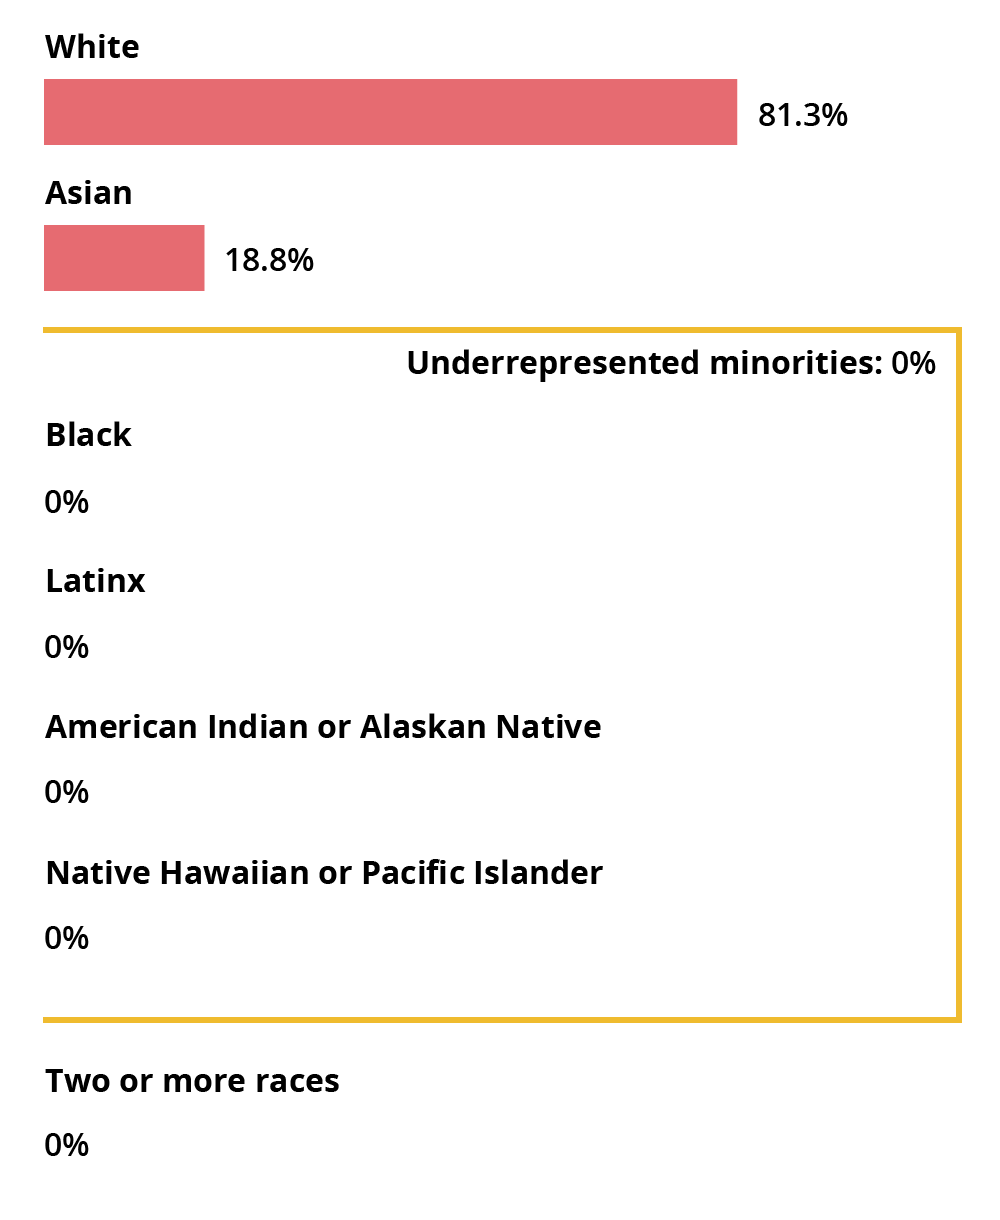 White: 81.3%, Asian: 18.8%, Black: 0, Latinx: 0, American Indian or Alaskan Native: 0, Native Hawaiian or Pacific Islander: 0, Two or more races: 0. Underrepresented minorities total: 0.